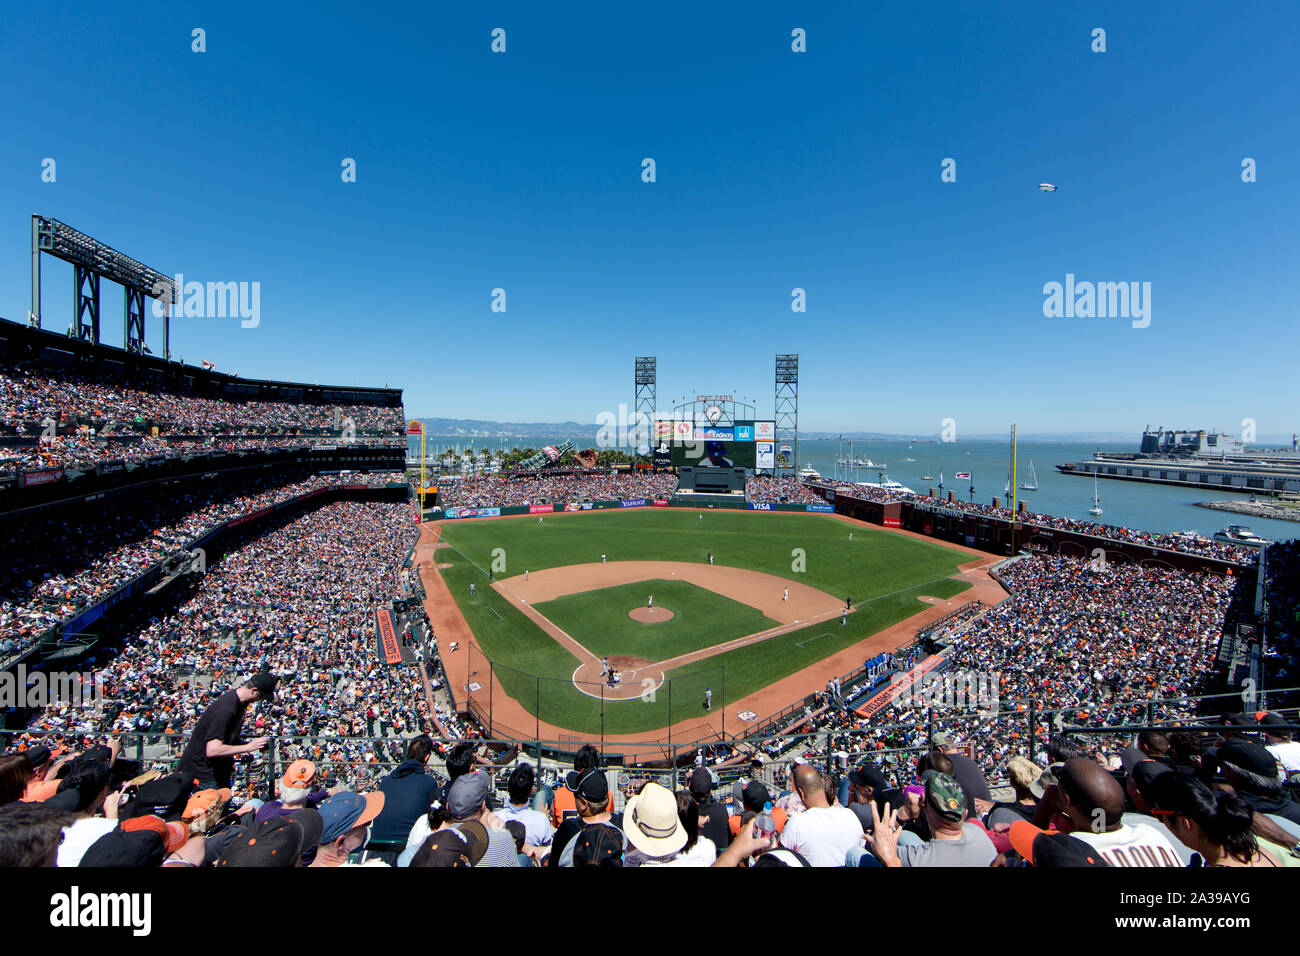 San Francisco Giants baseball team plays the Chicago Cubs at AT&T ball park in San Francisco, California Stock Photo